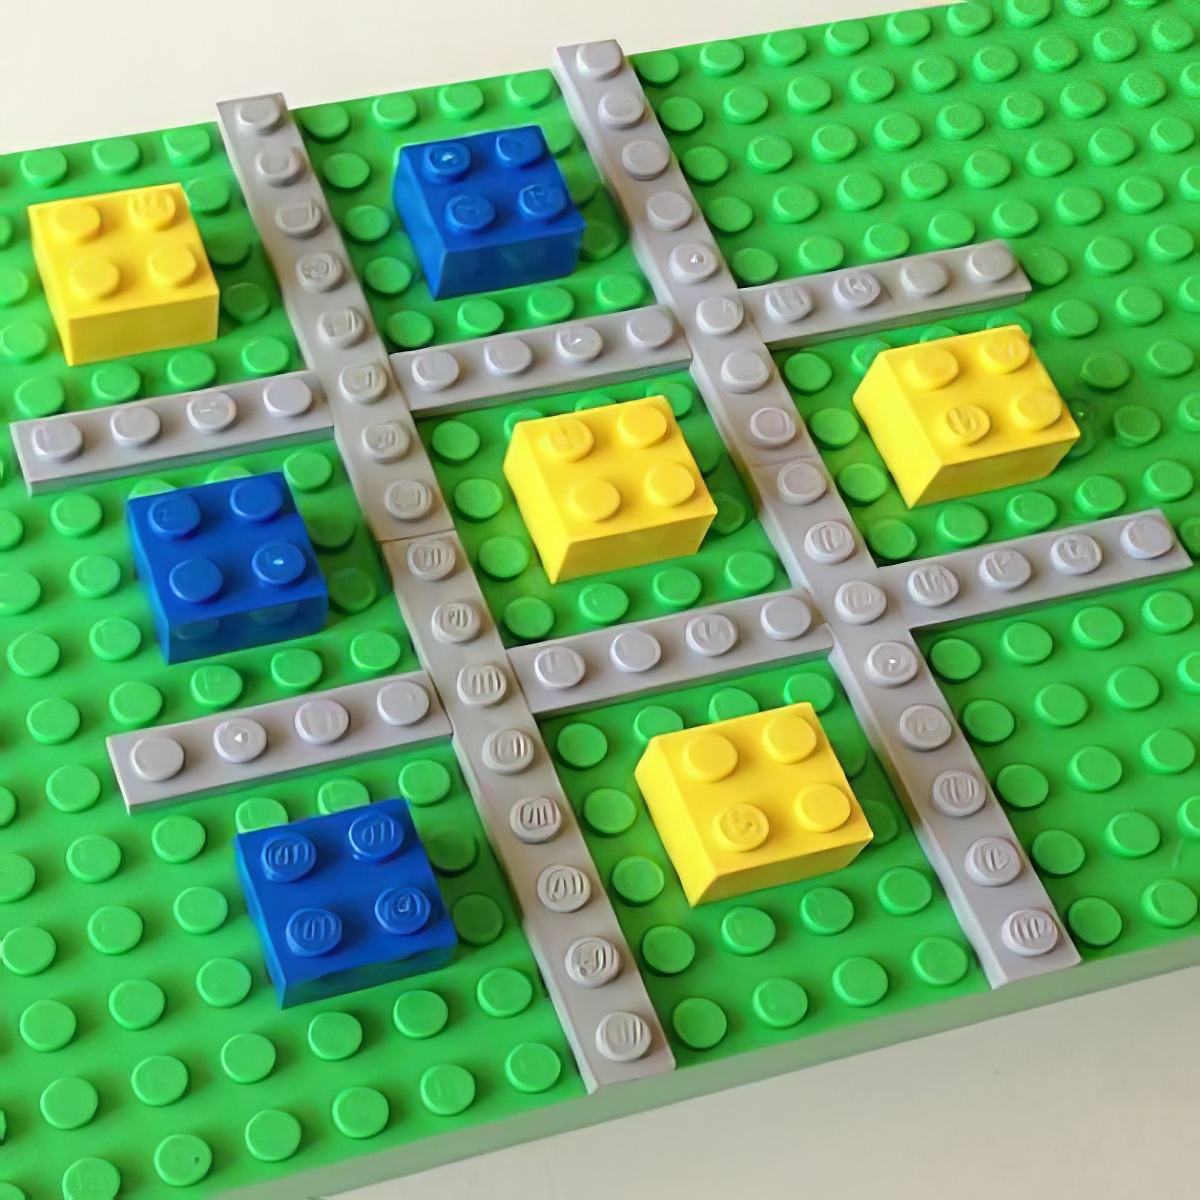 Tic-Tac-Toe Lego Game, checker lego board game